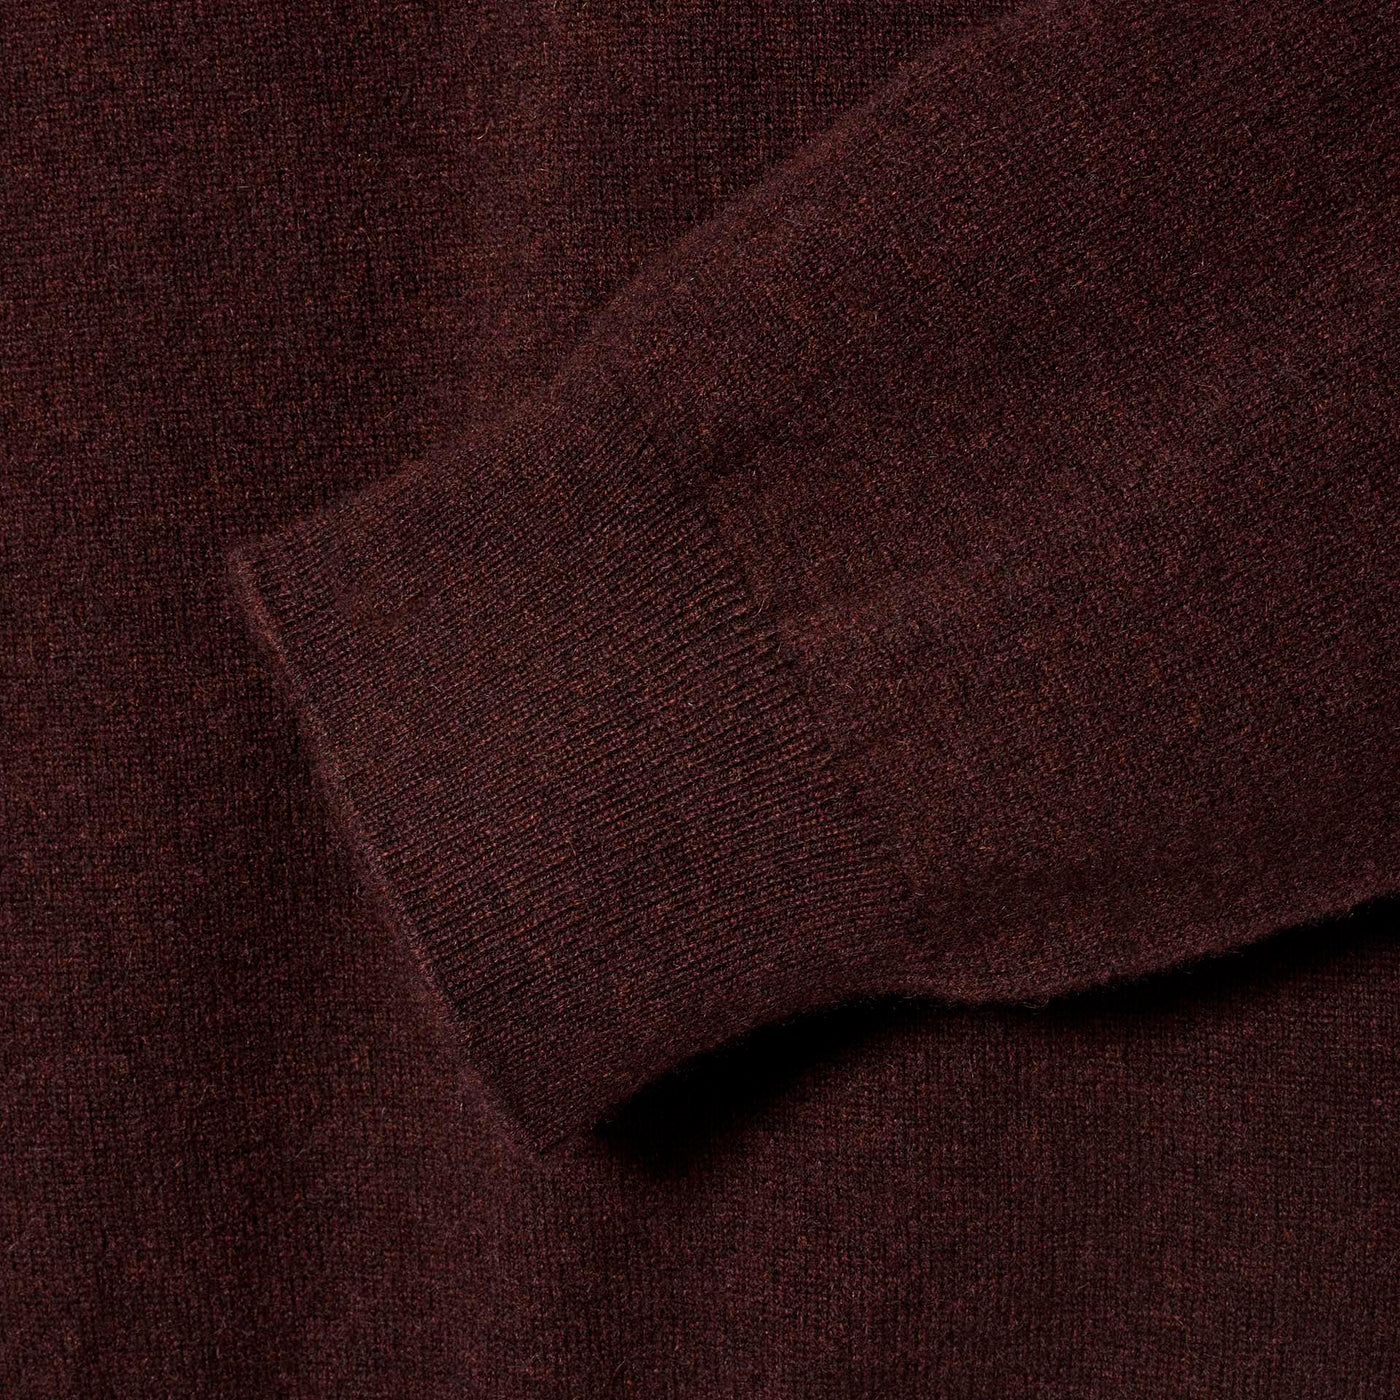 Quarter Zip Cashmere Sweater - Malt